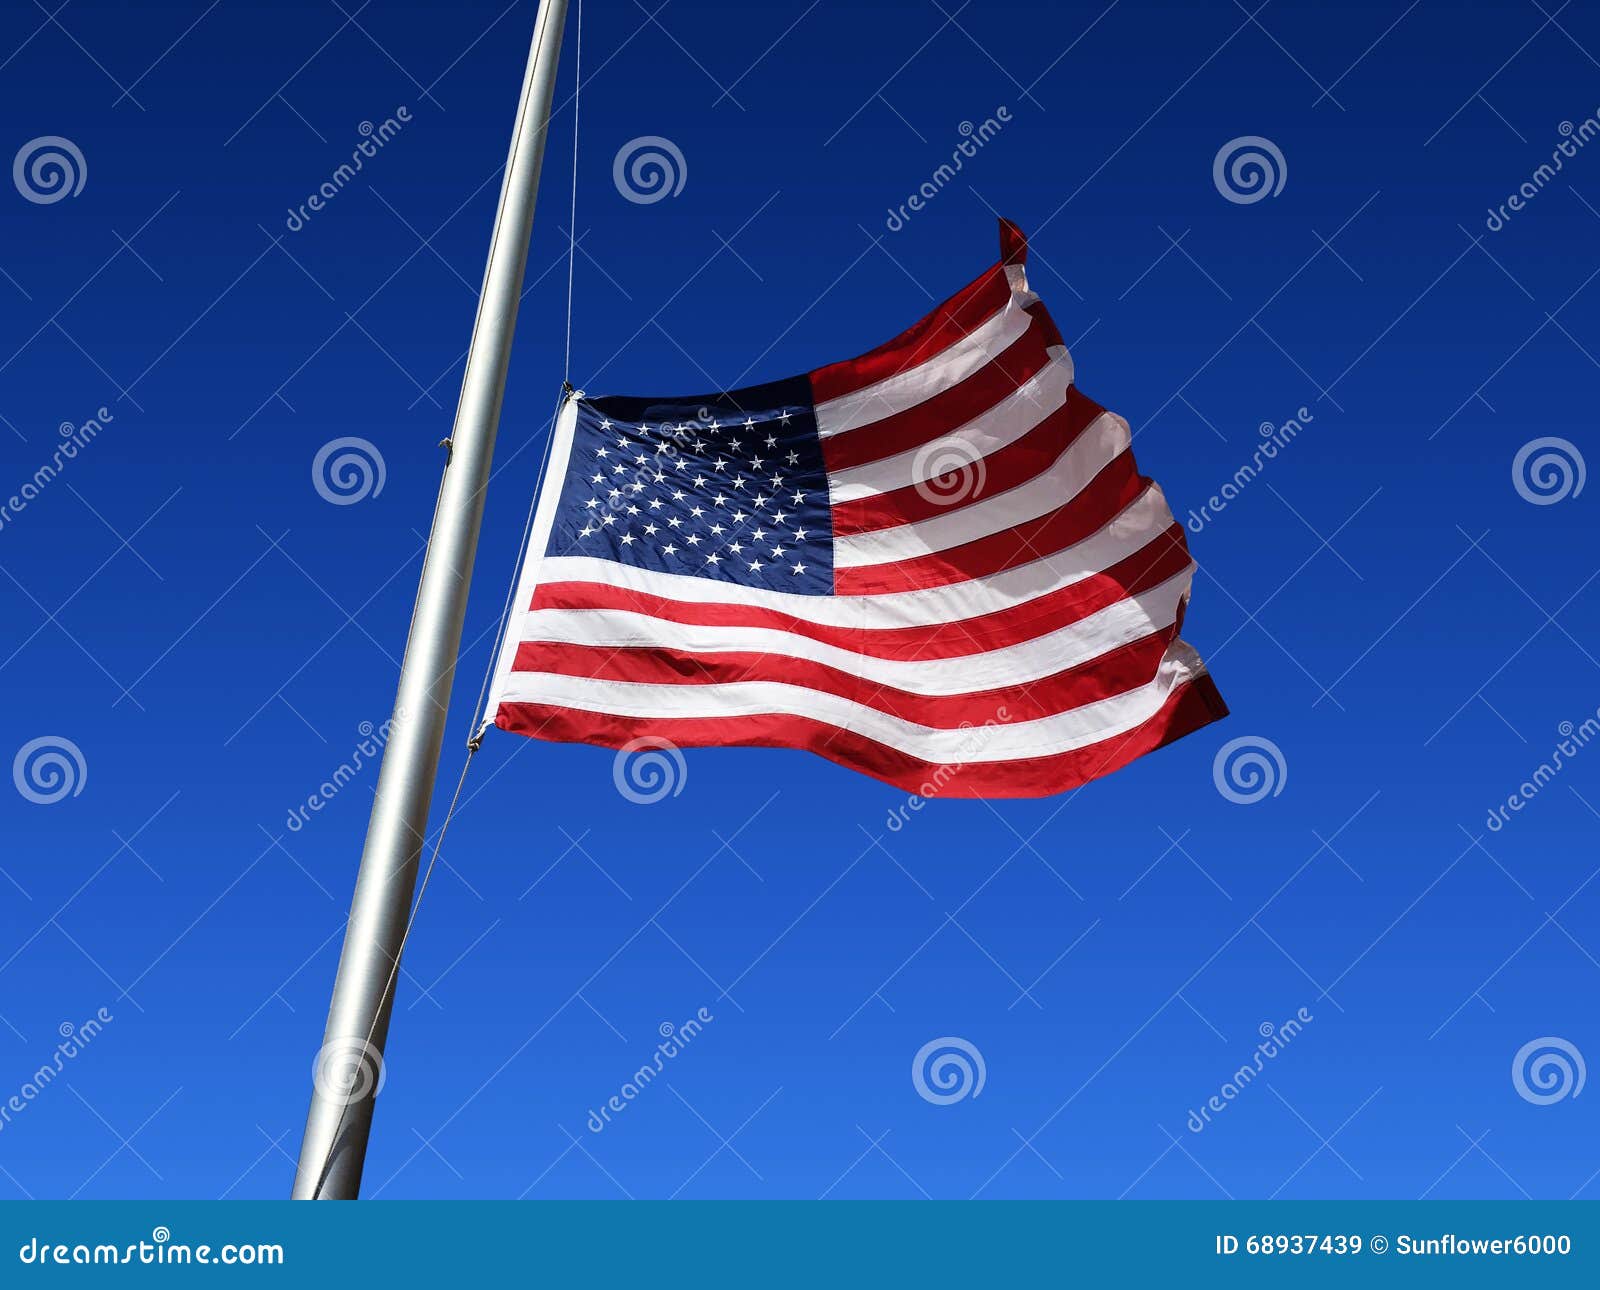 american flag is flown at half staff